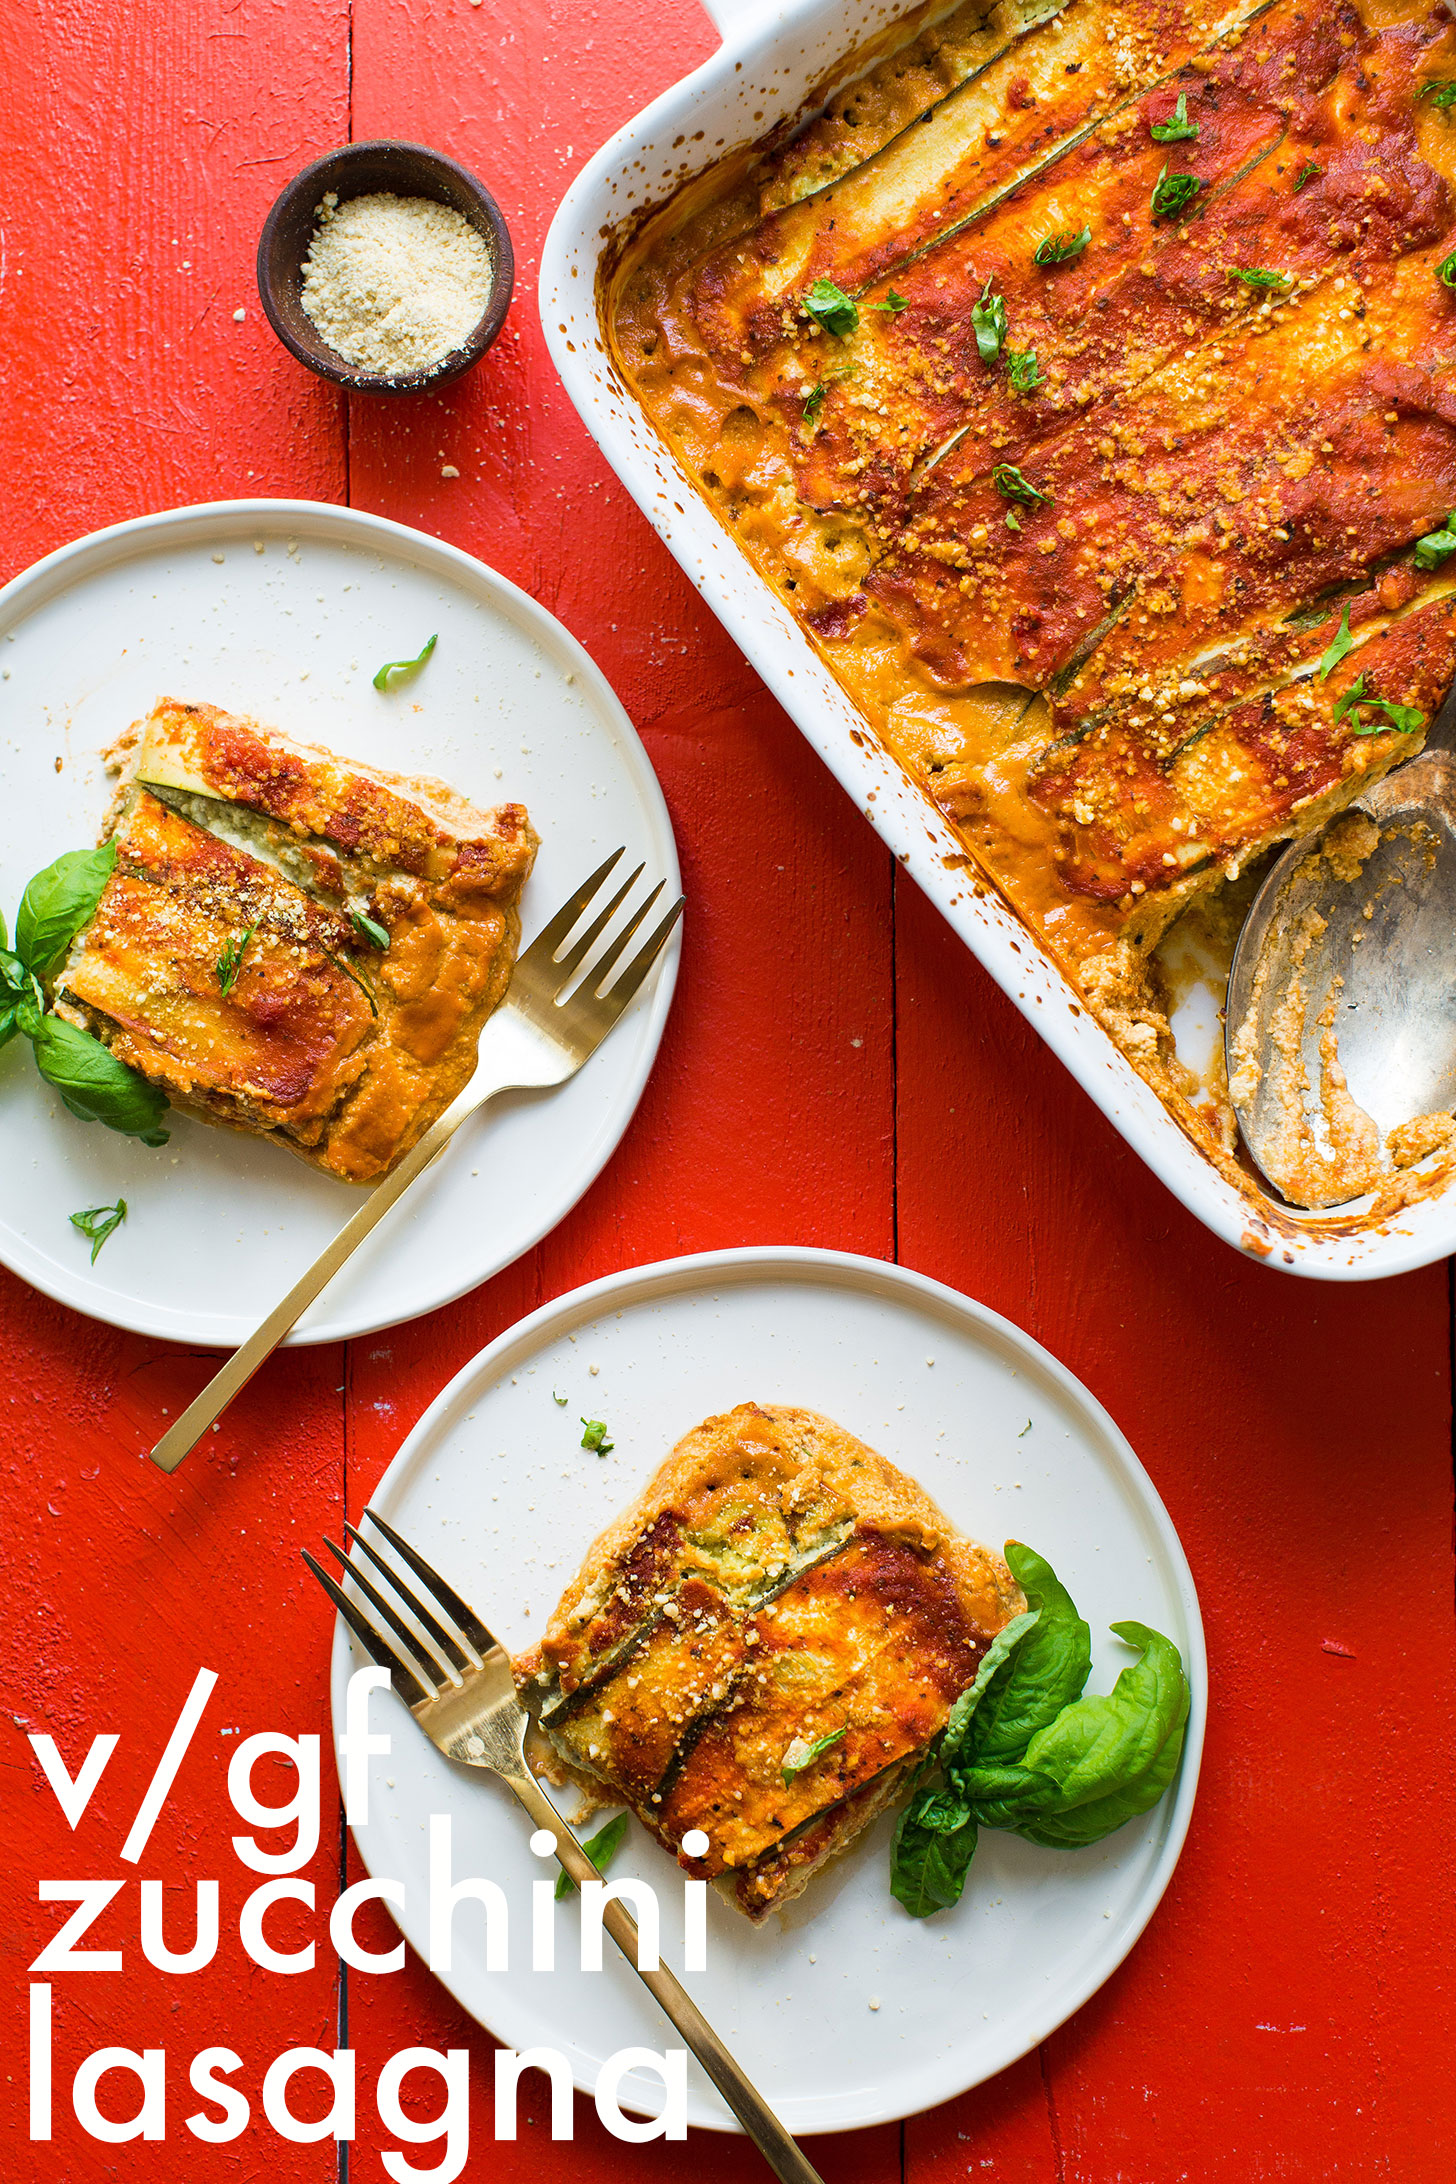 Vegan-glutenfree-lasagna-with-diy-nut-ricotta-8-ingredients-protein-rich-so-healthy-recipe-lasagna-dinner-healthy